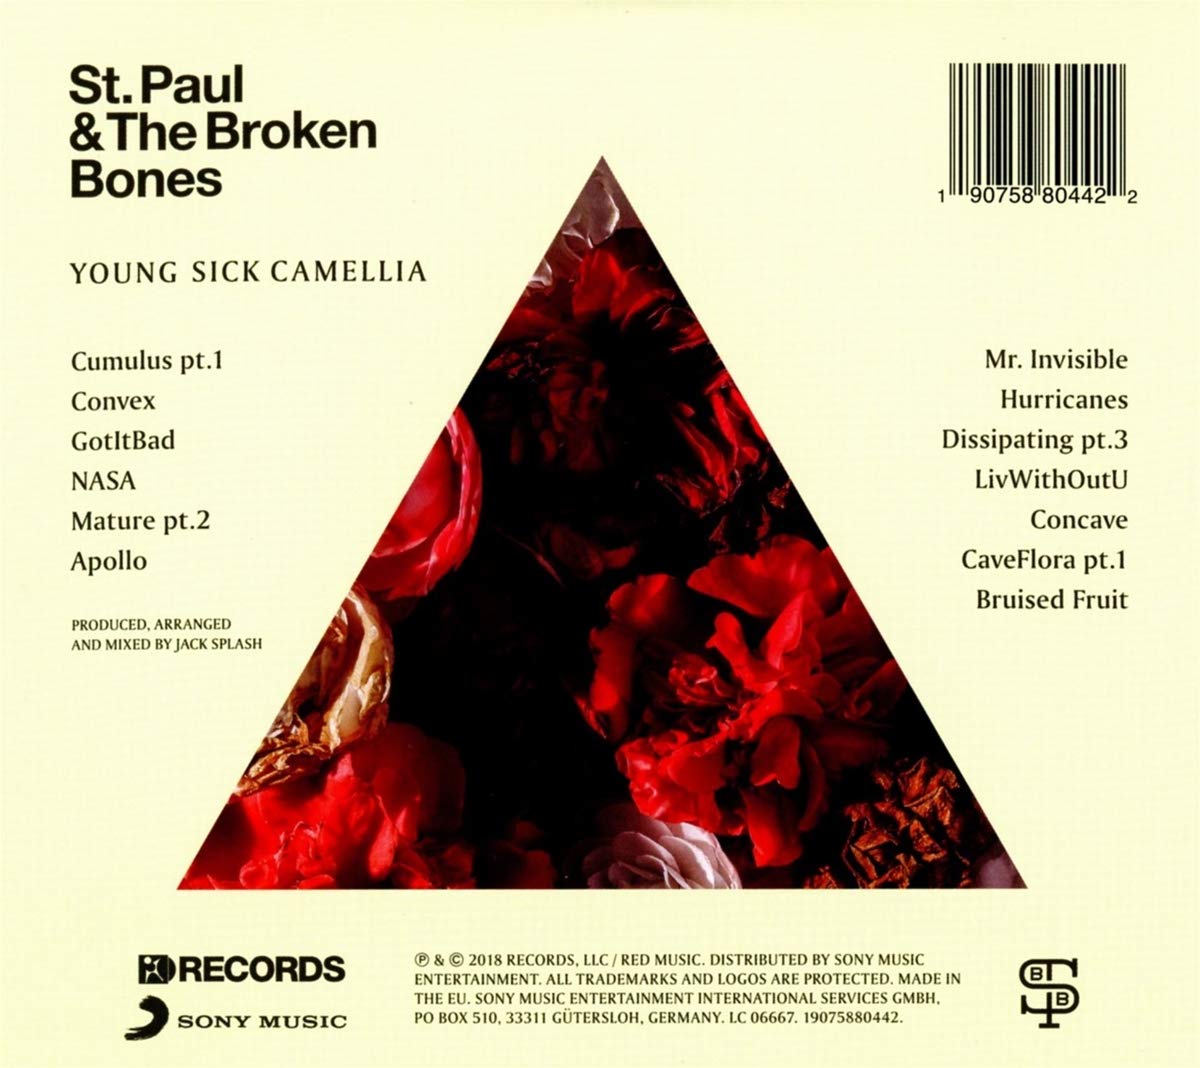 St. Paul & The Broken Bones/Young Sick Camellia [CD]